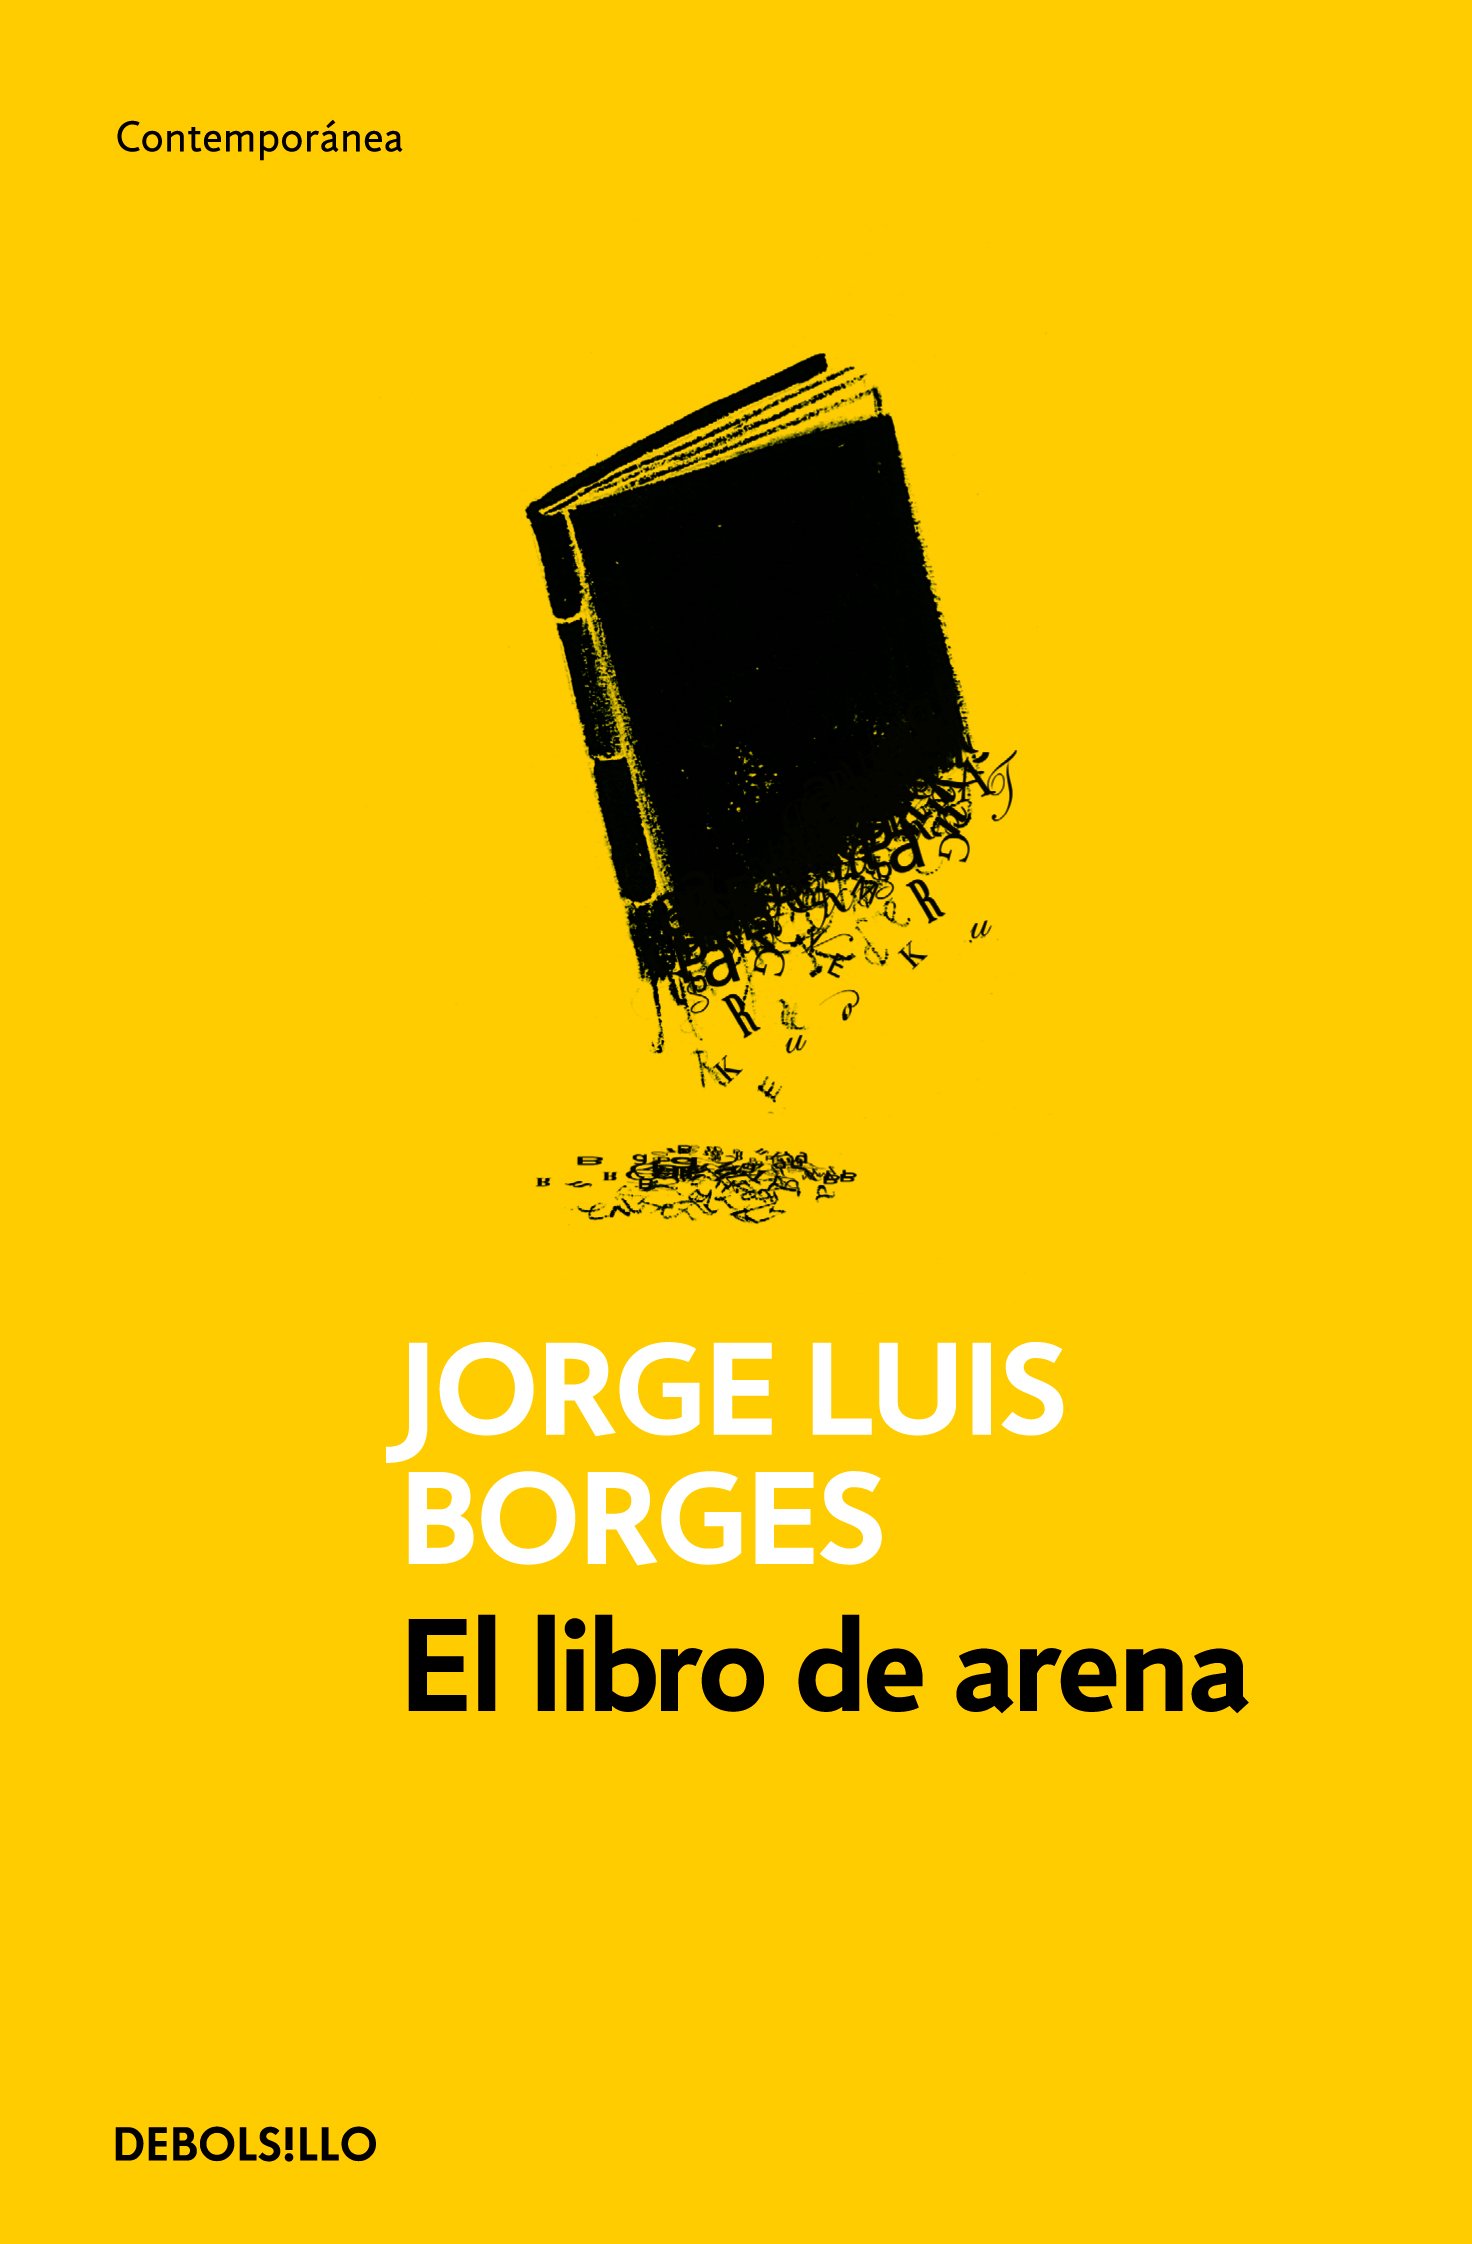 Tres cuentos para recordar a Jorge Luis Borges - Infobae